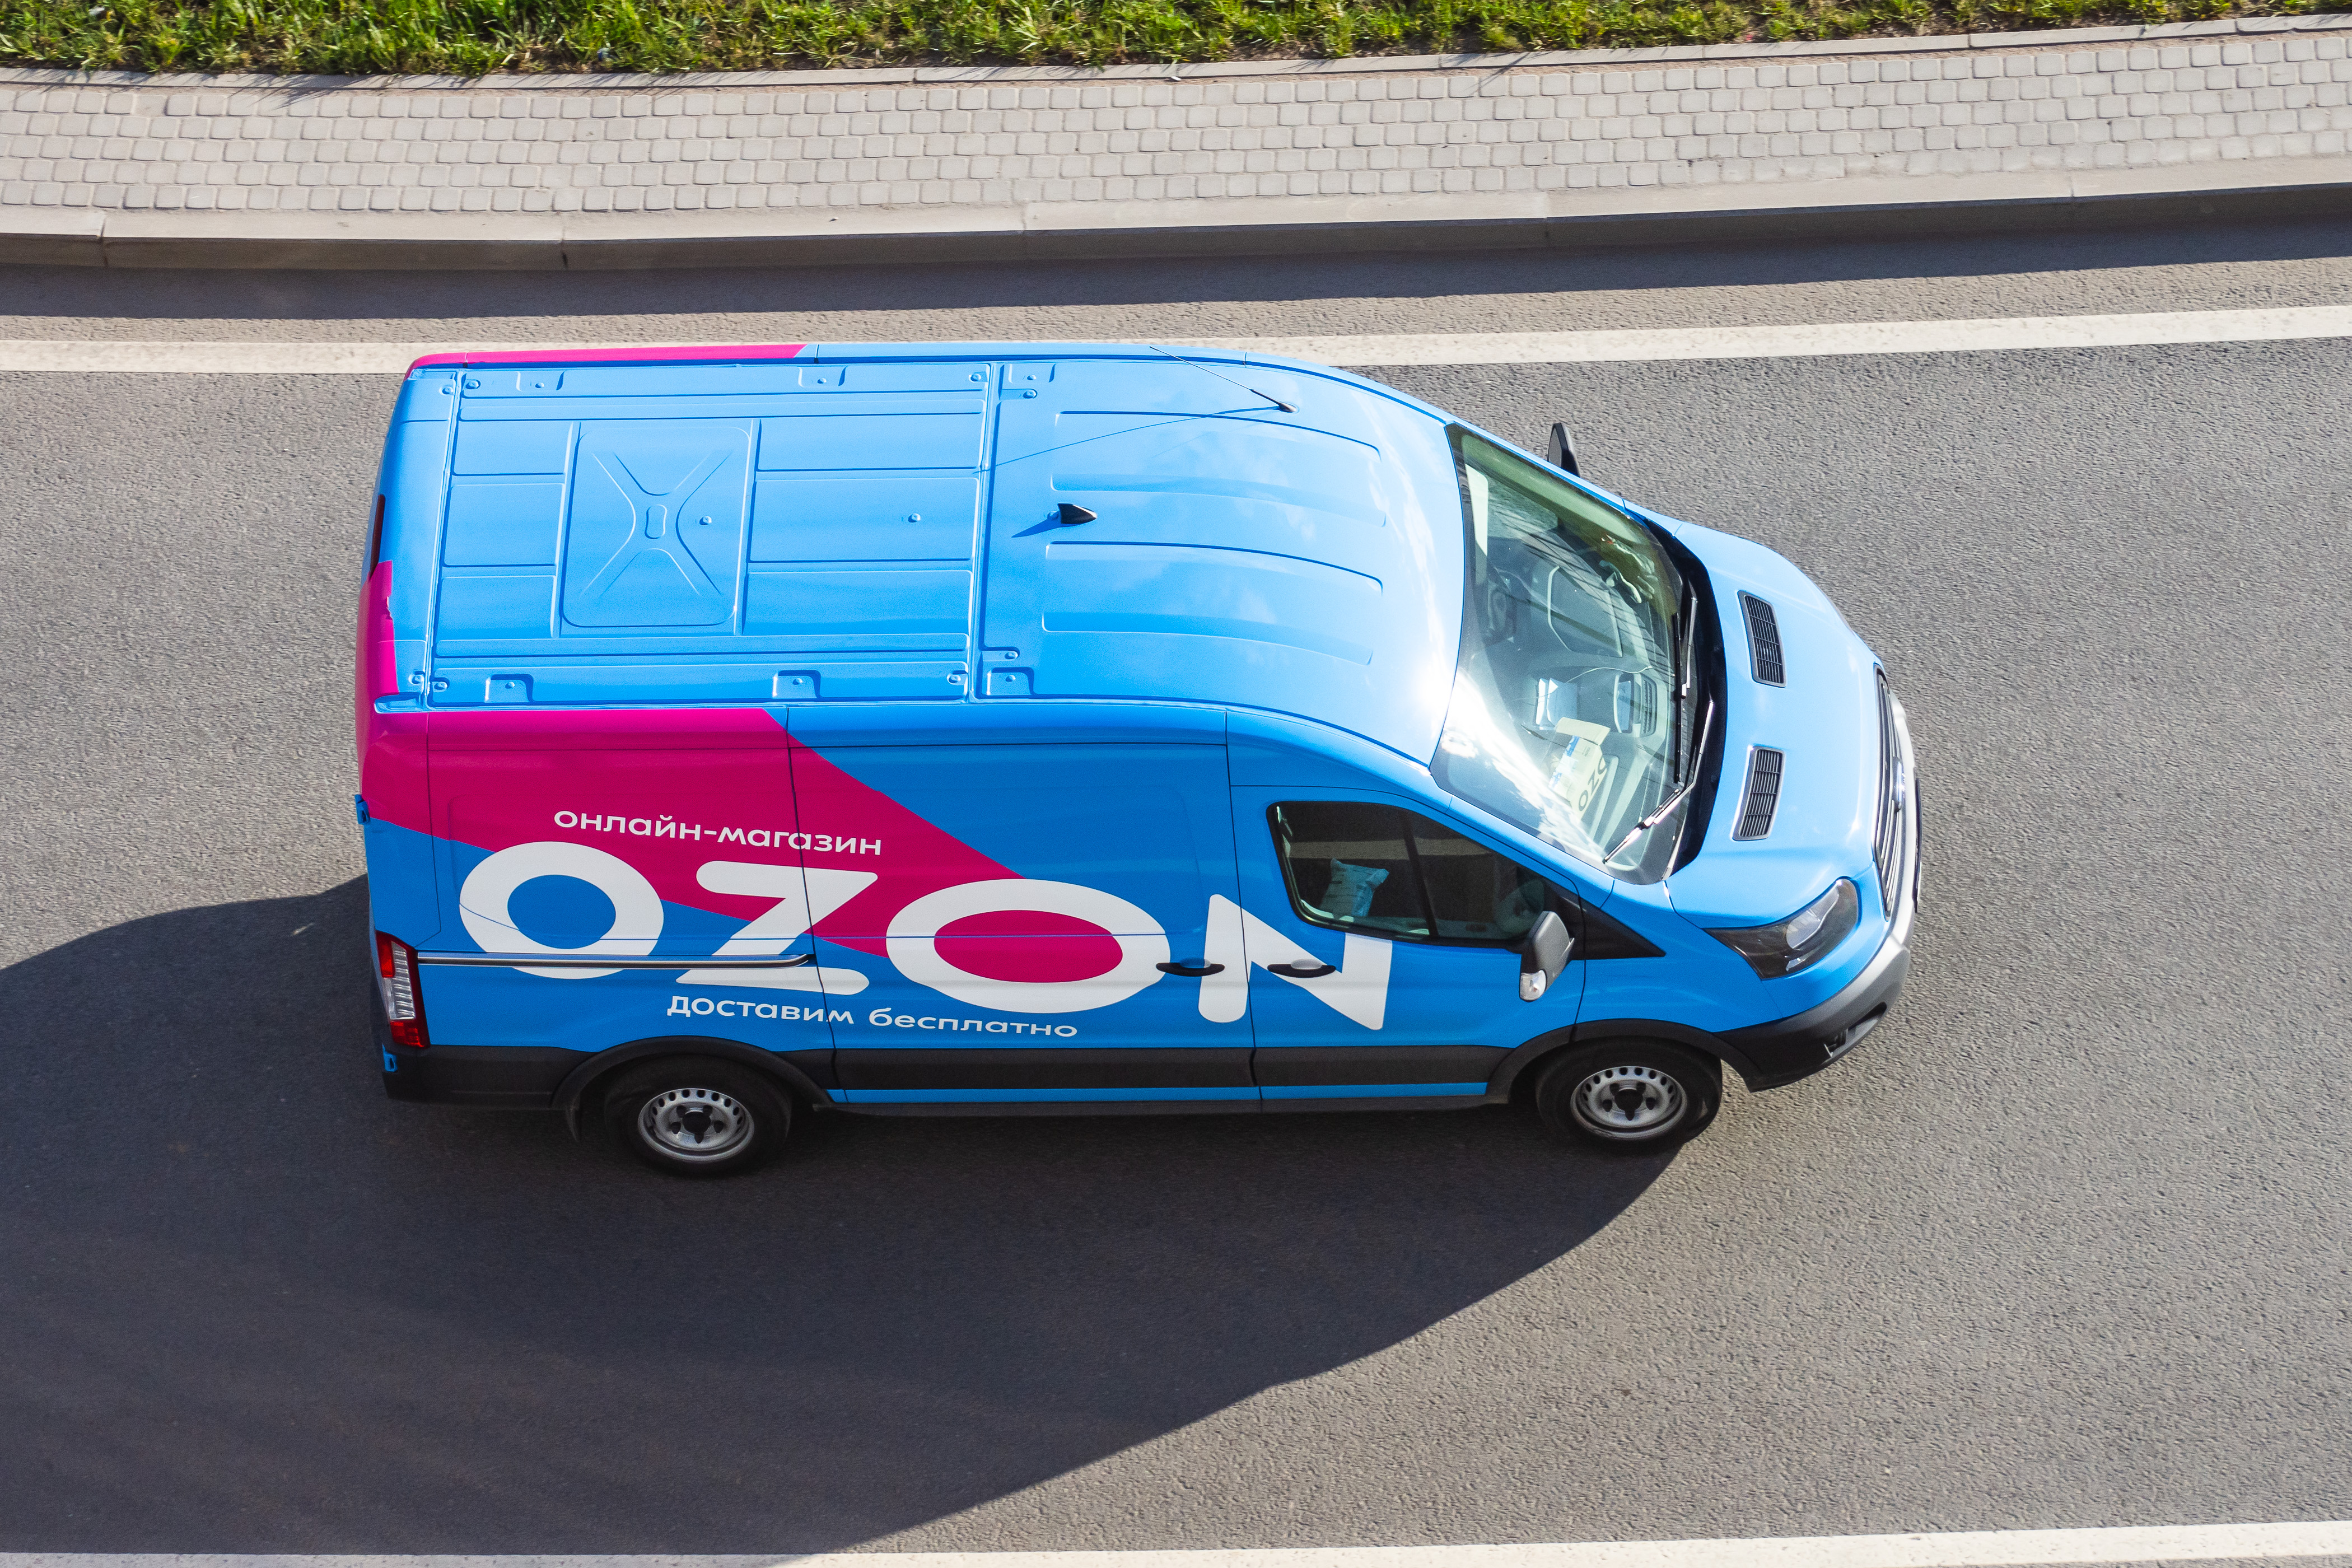 Машина курьер озон. Ford Transit Озон. OZON экспресс. OZON Express машина. Форд Транзит Озон Озон.